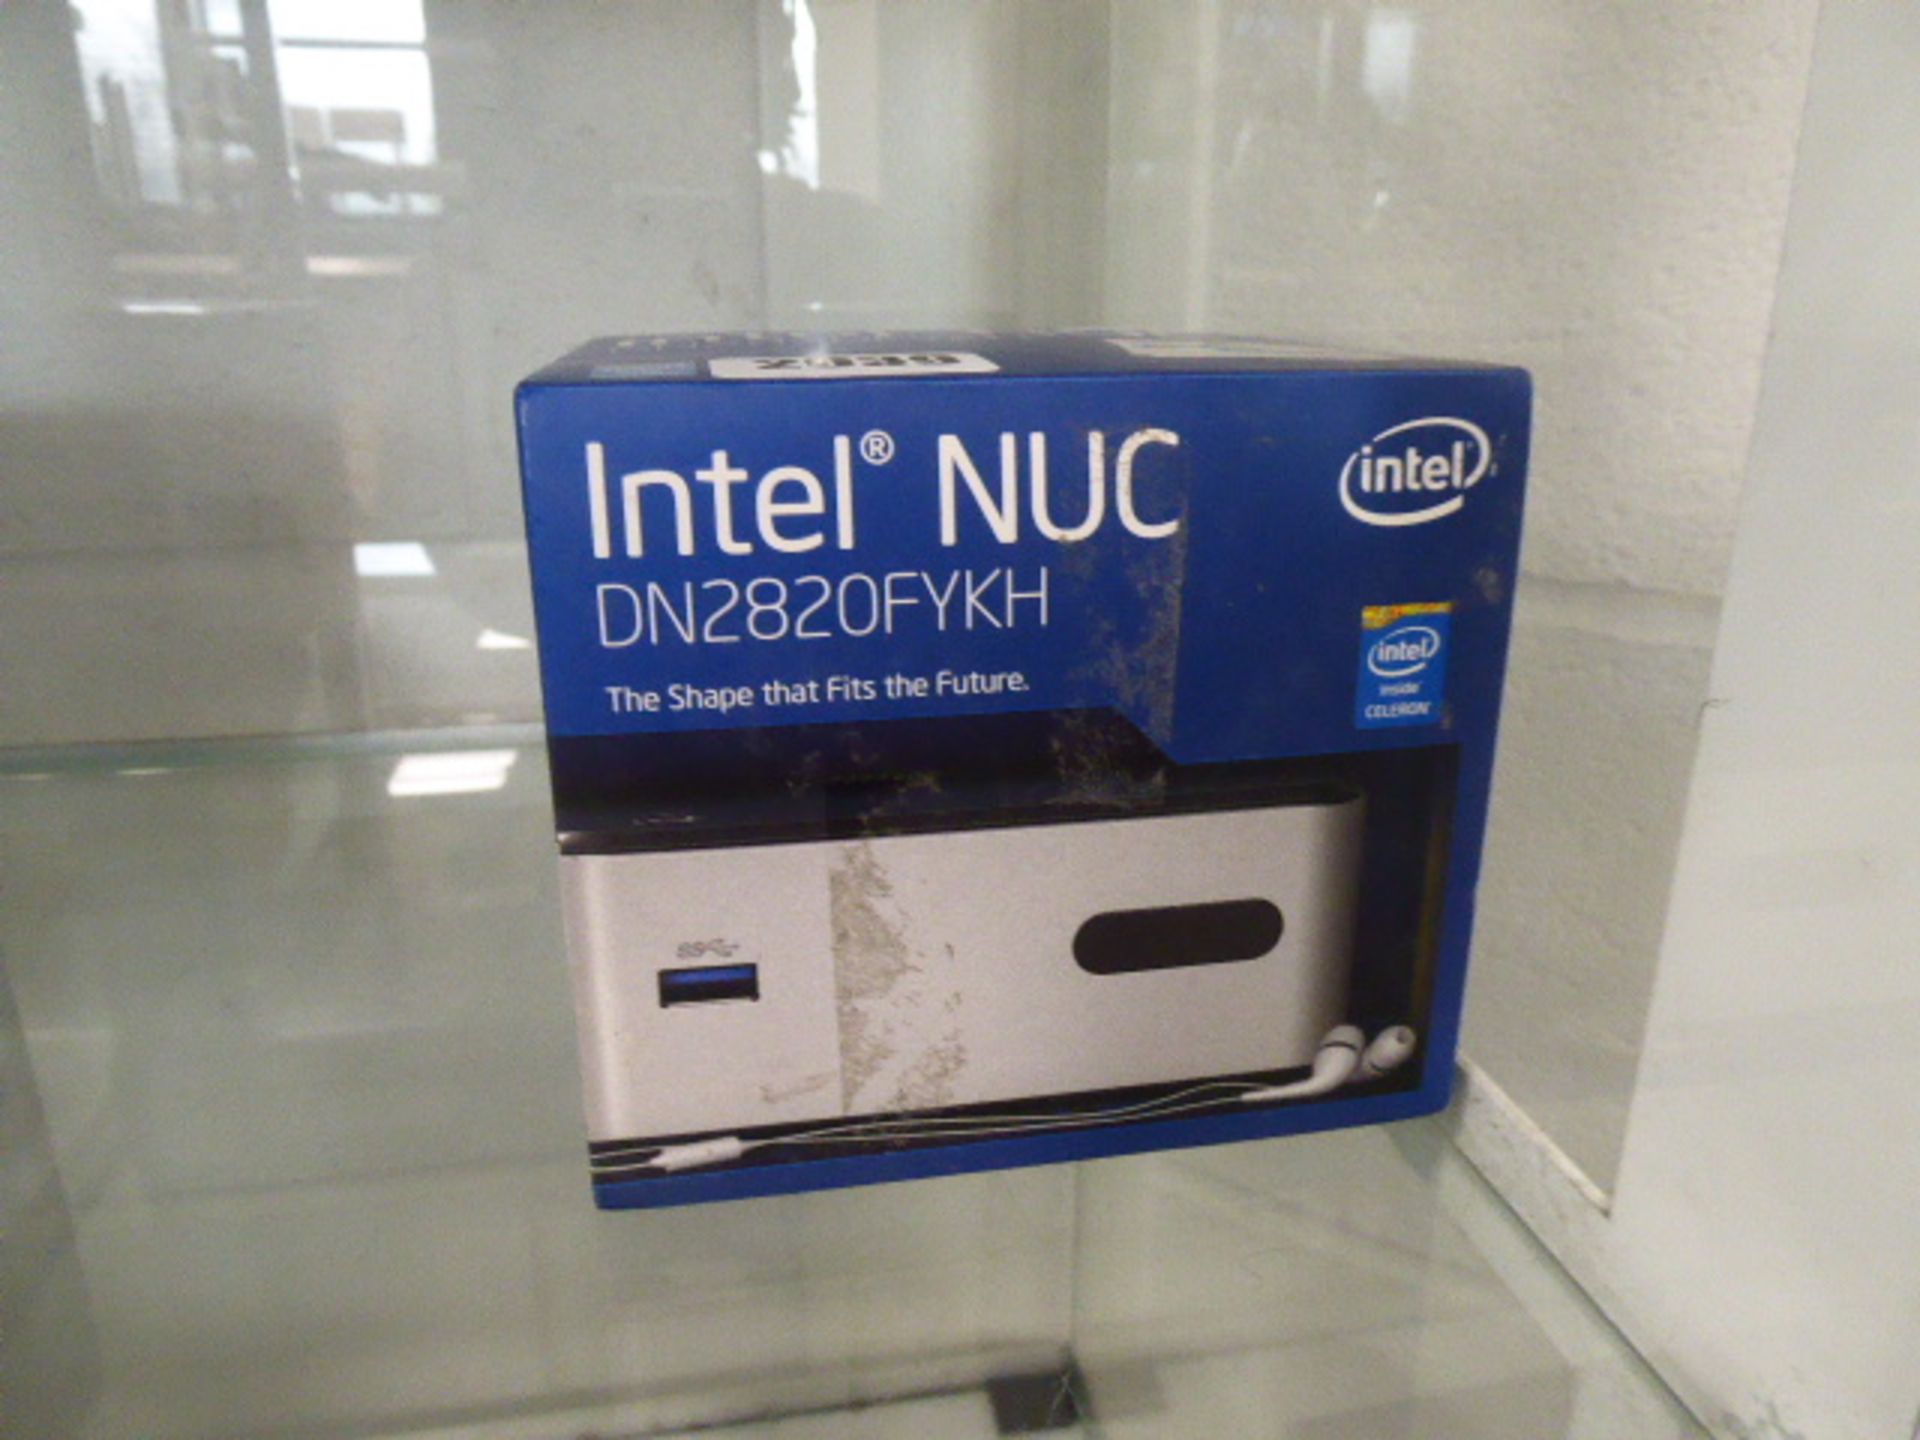 Intel Nuc Intel Celeron computer with box